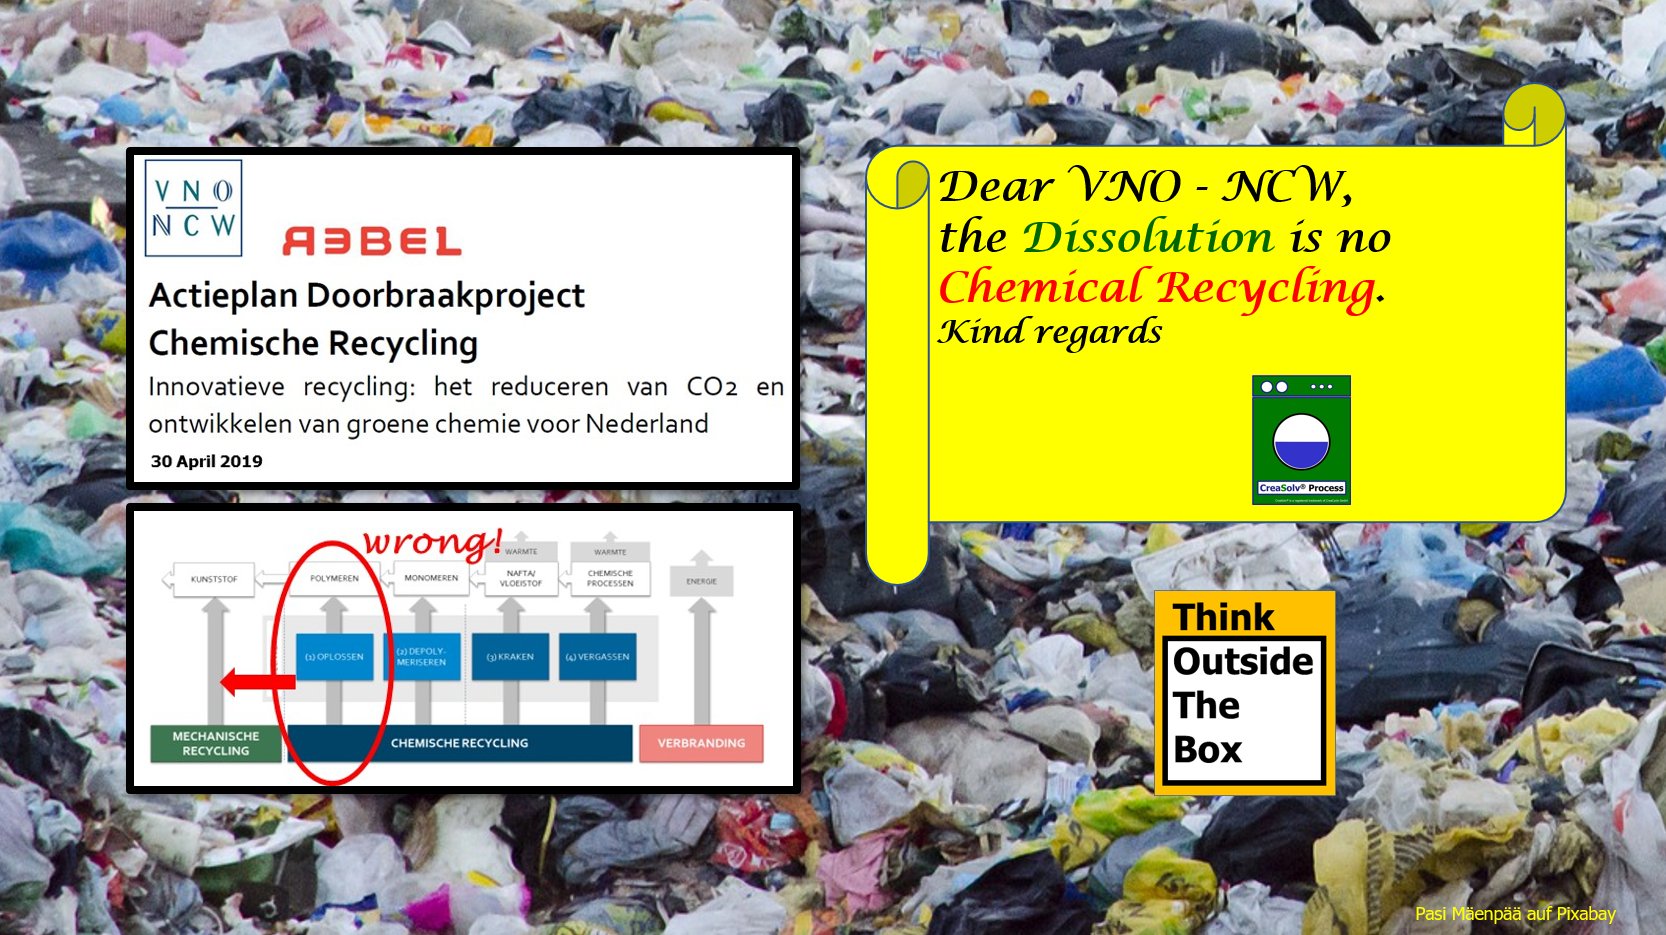 2020.02.19 VNO NCV Chemical Recycling